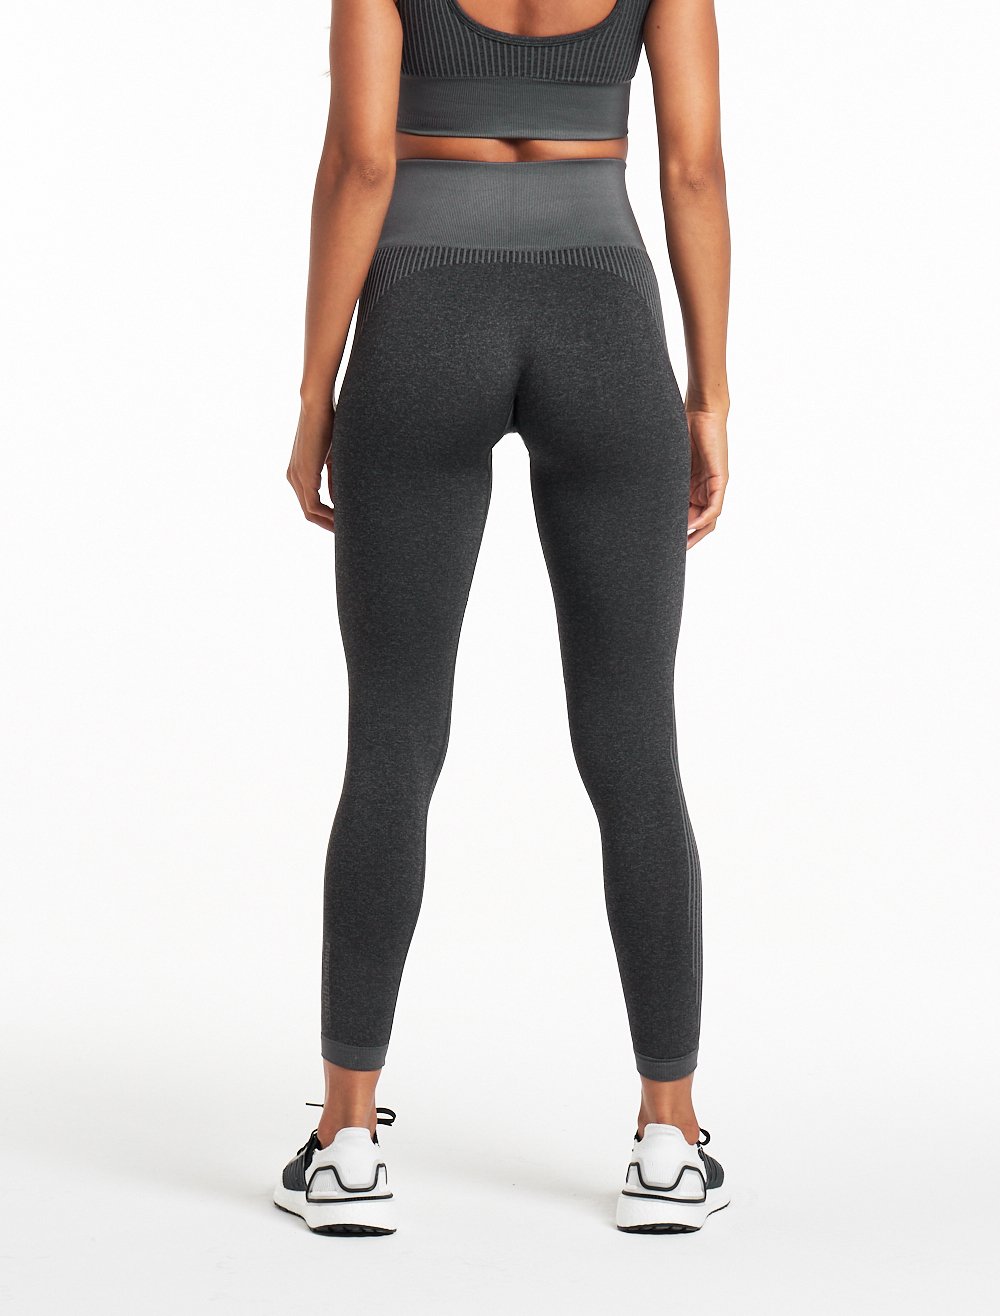 Pursue Fitness Adapt Seamless High Waist Leggings in Black Womens Size S